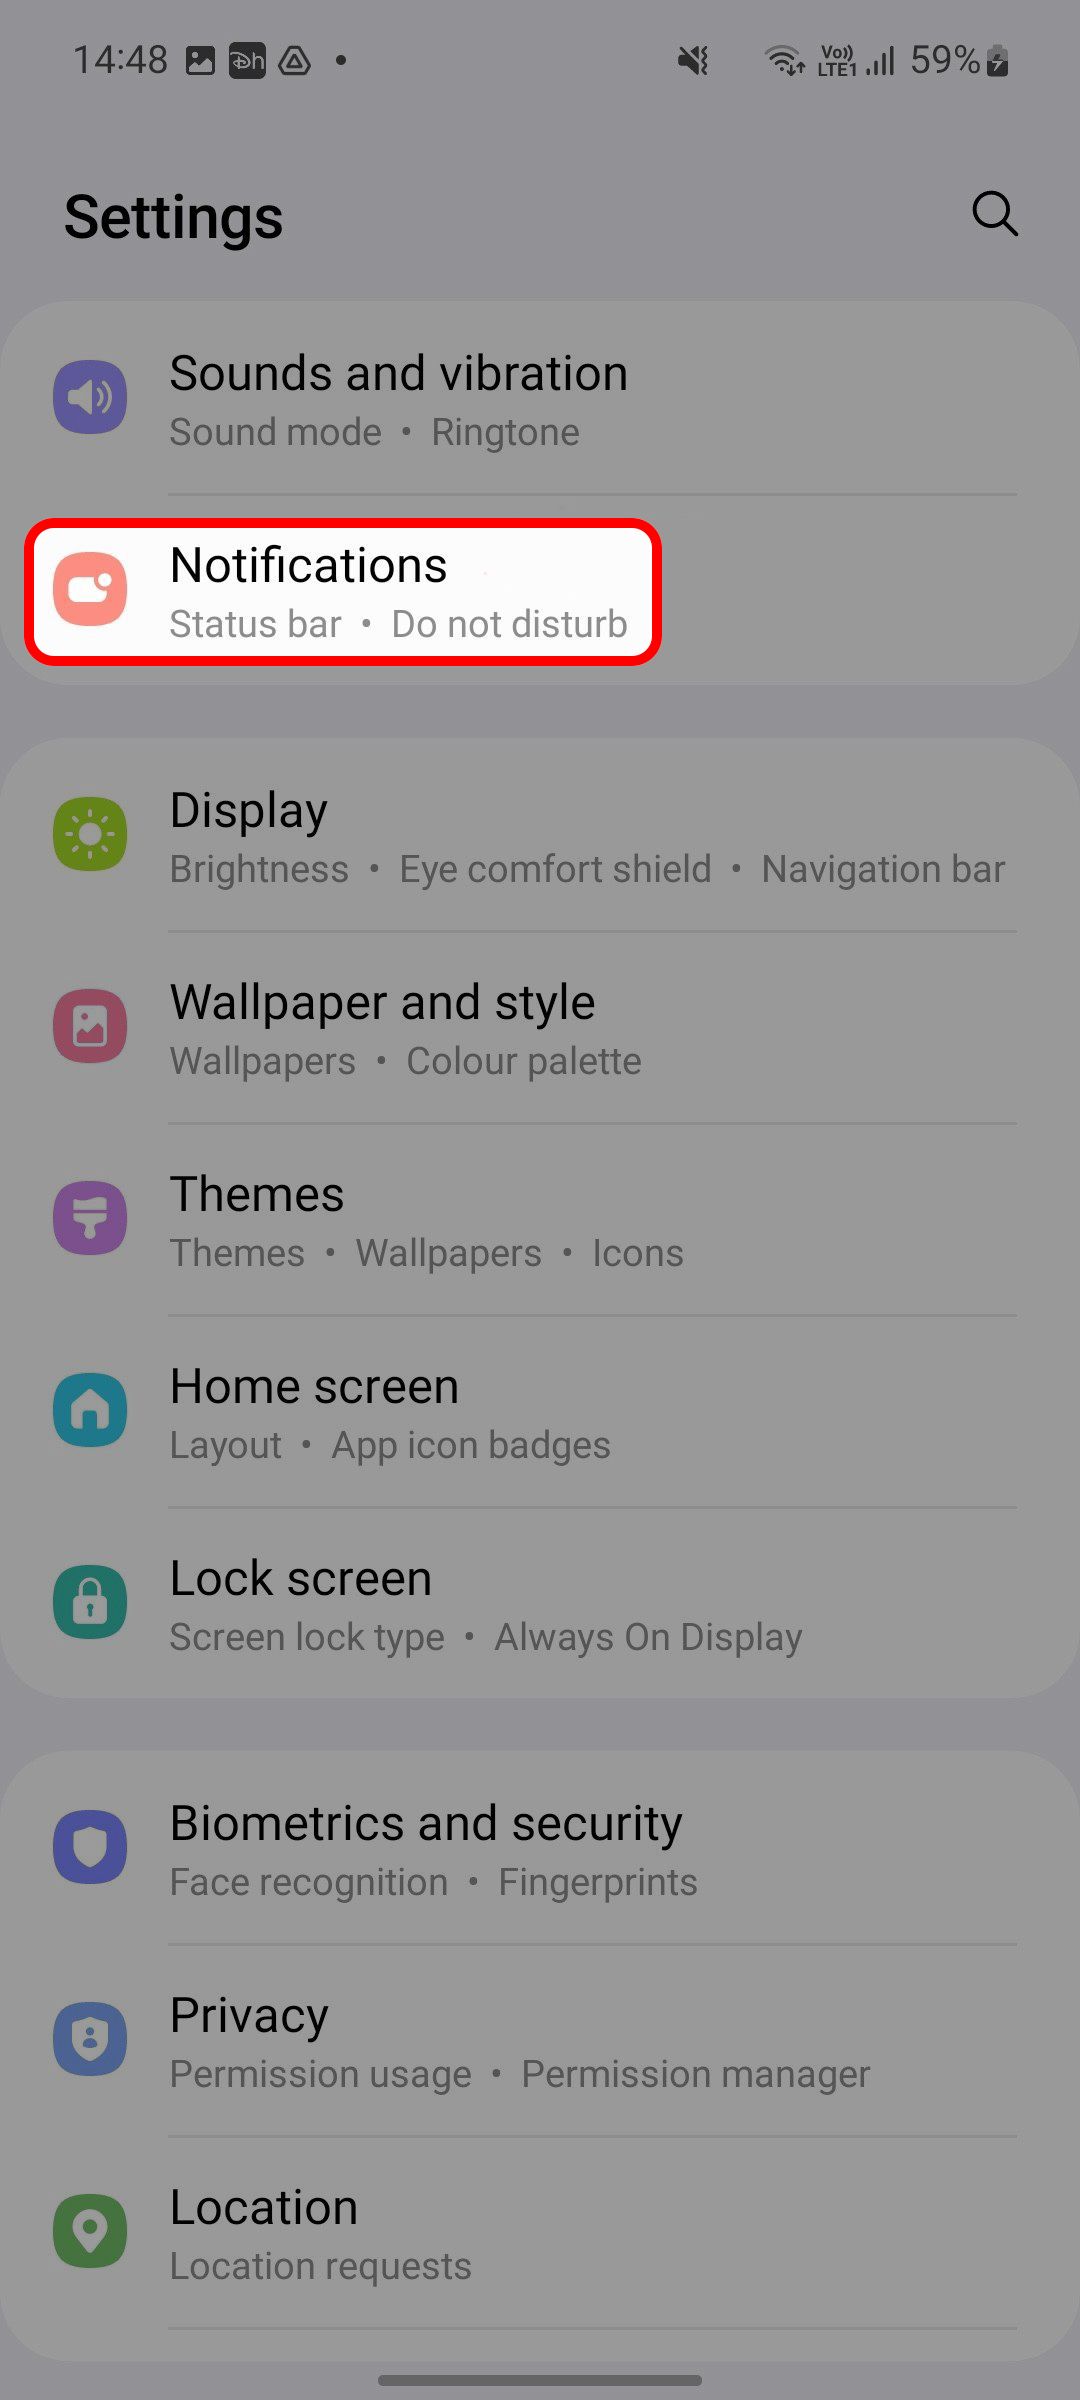 Samsung One UI settings menu highlighting the Notifications option